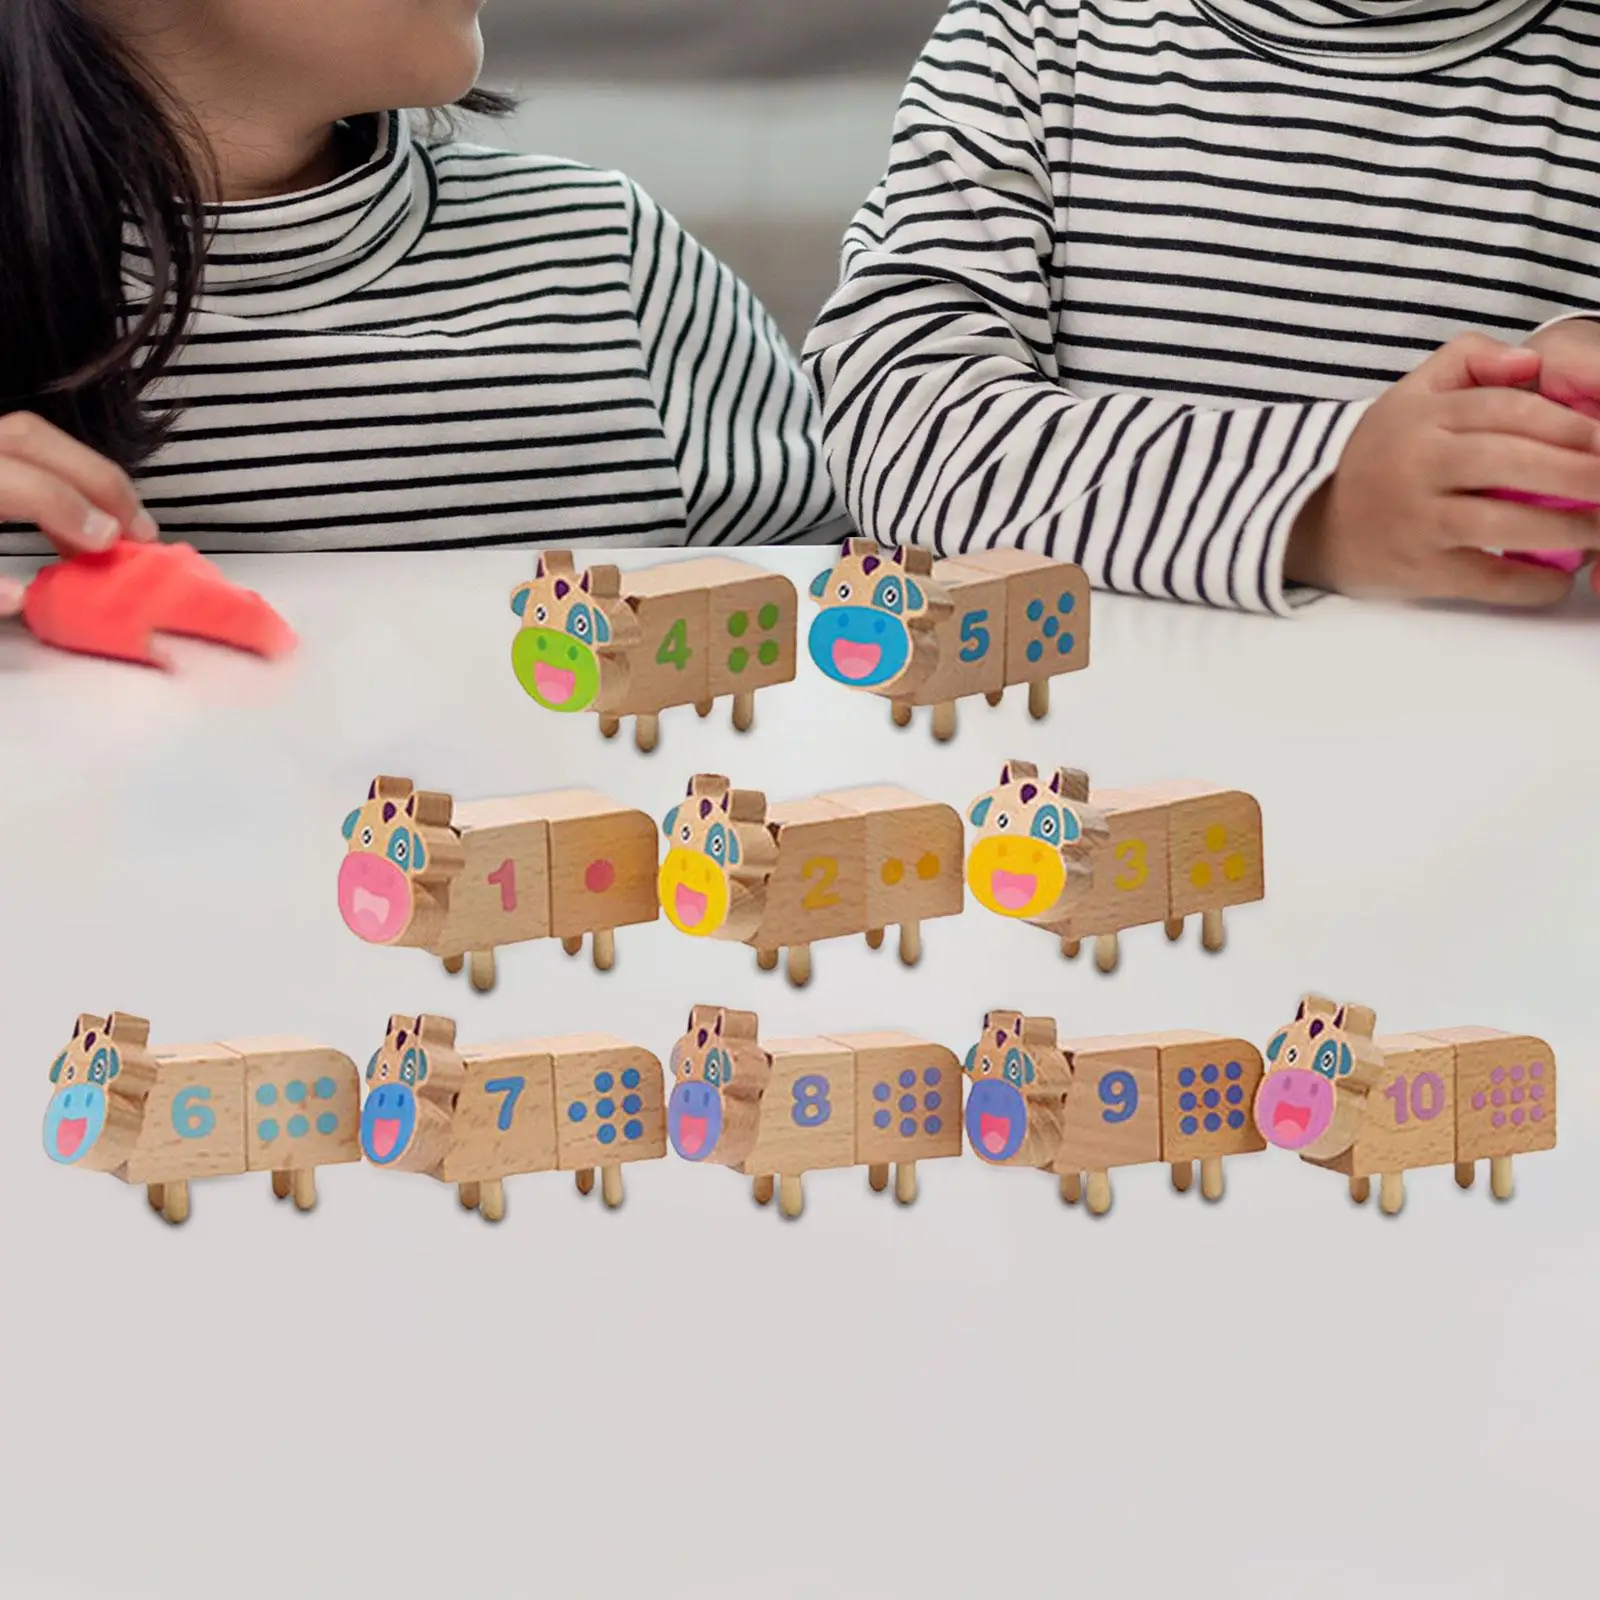 10Pcs Wooden Building Blocks Preschool Learning Fine Motor Skill Colored Montessori Toys for Boys Kids Girls Birthday Gifts